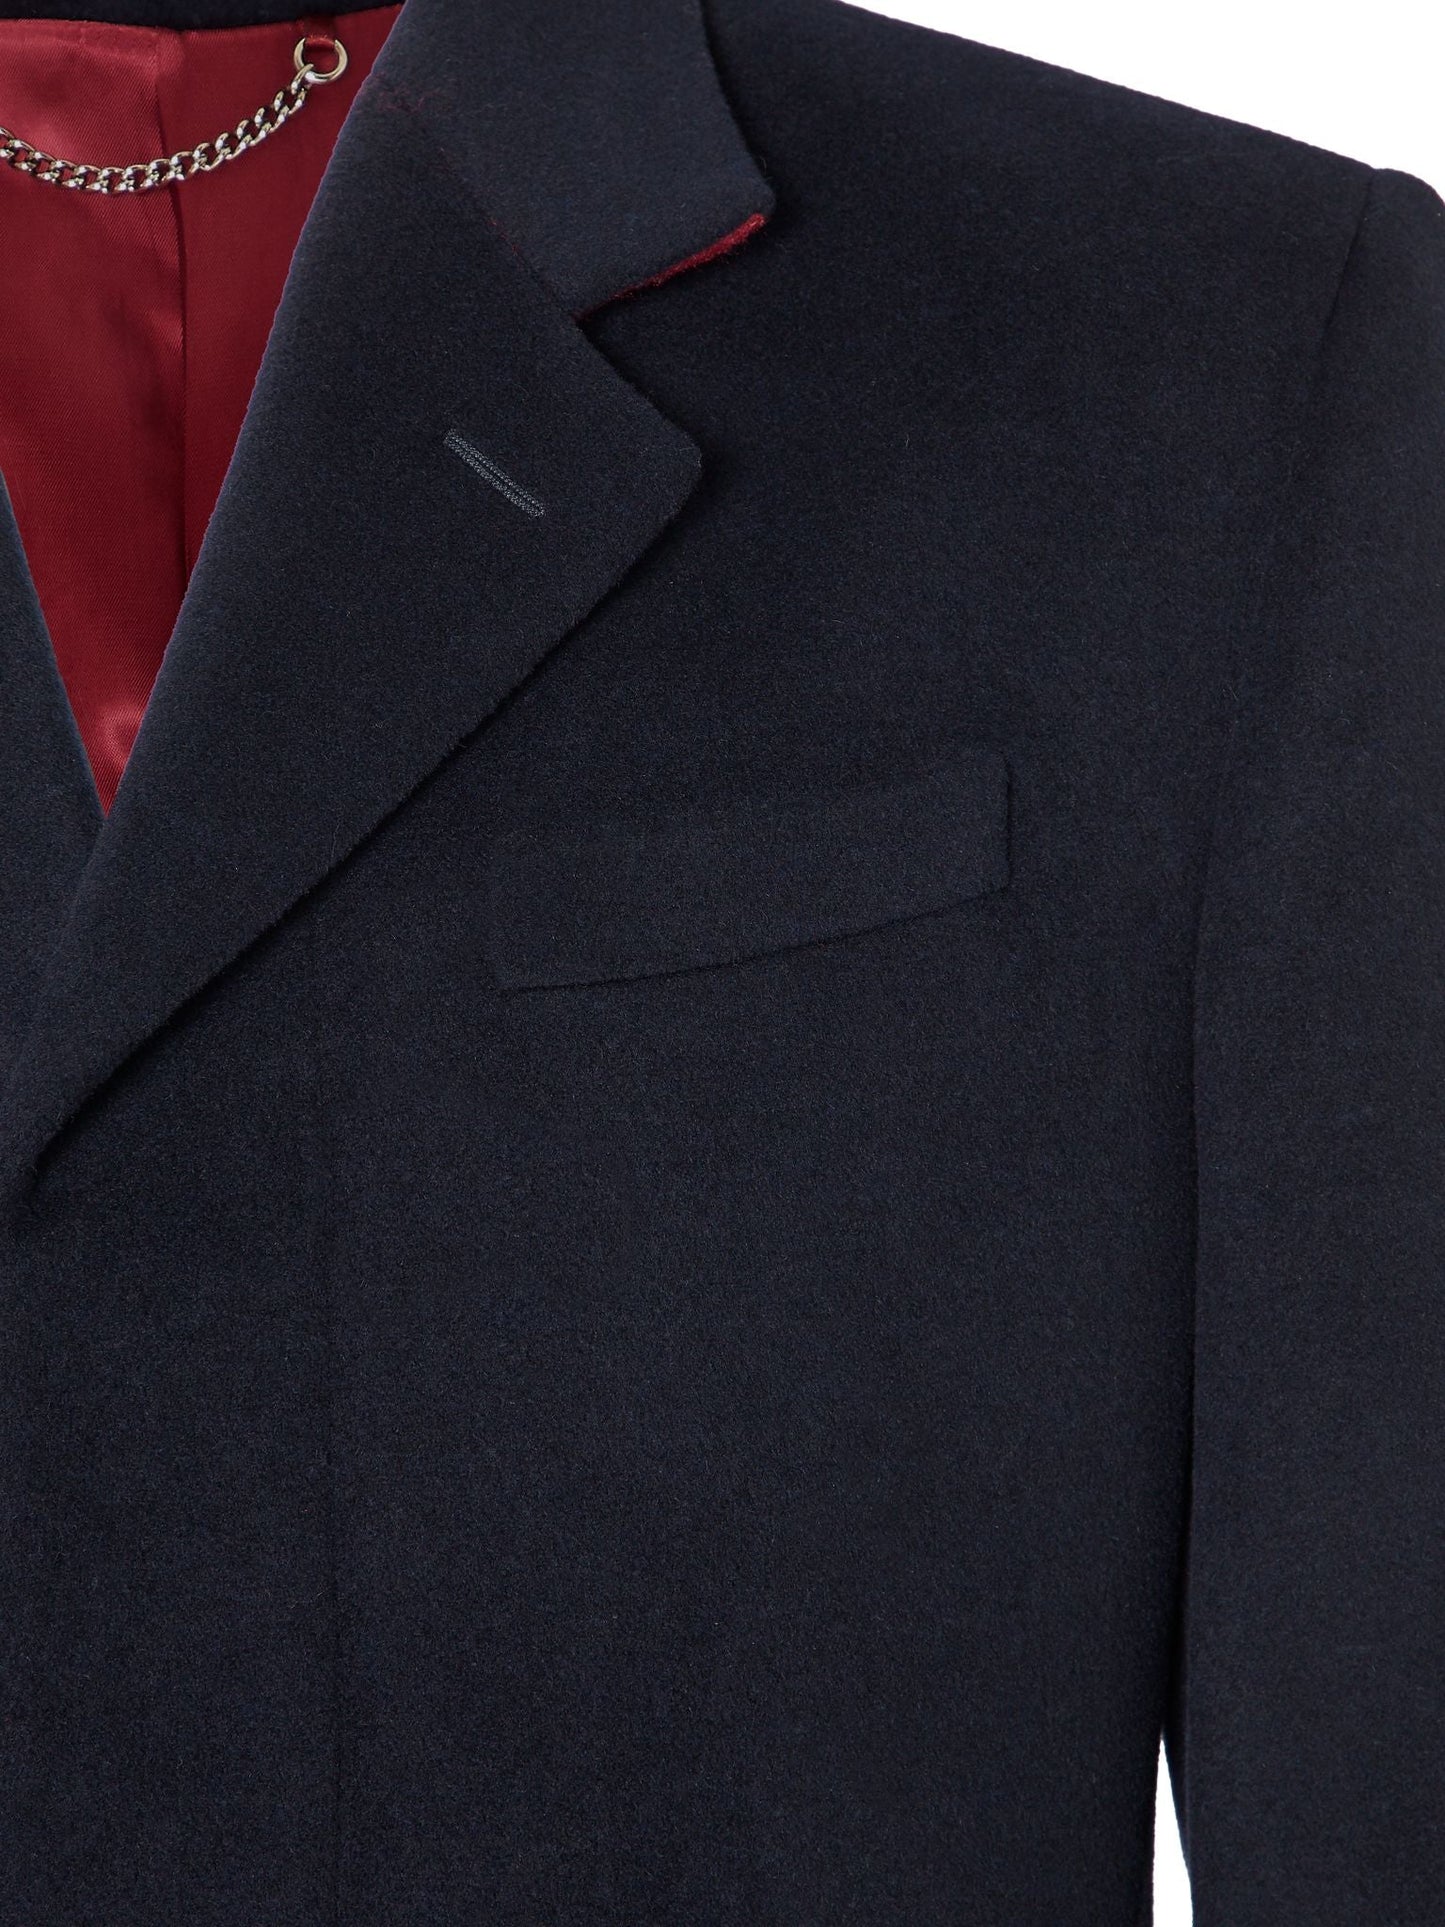 City Single Overcoat- Navy Cashmere Blend